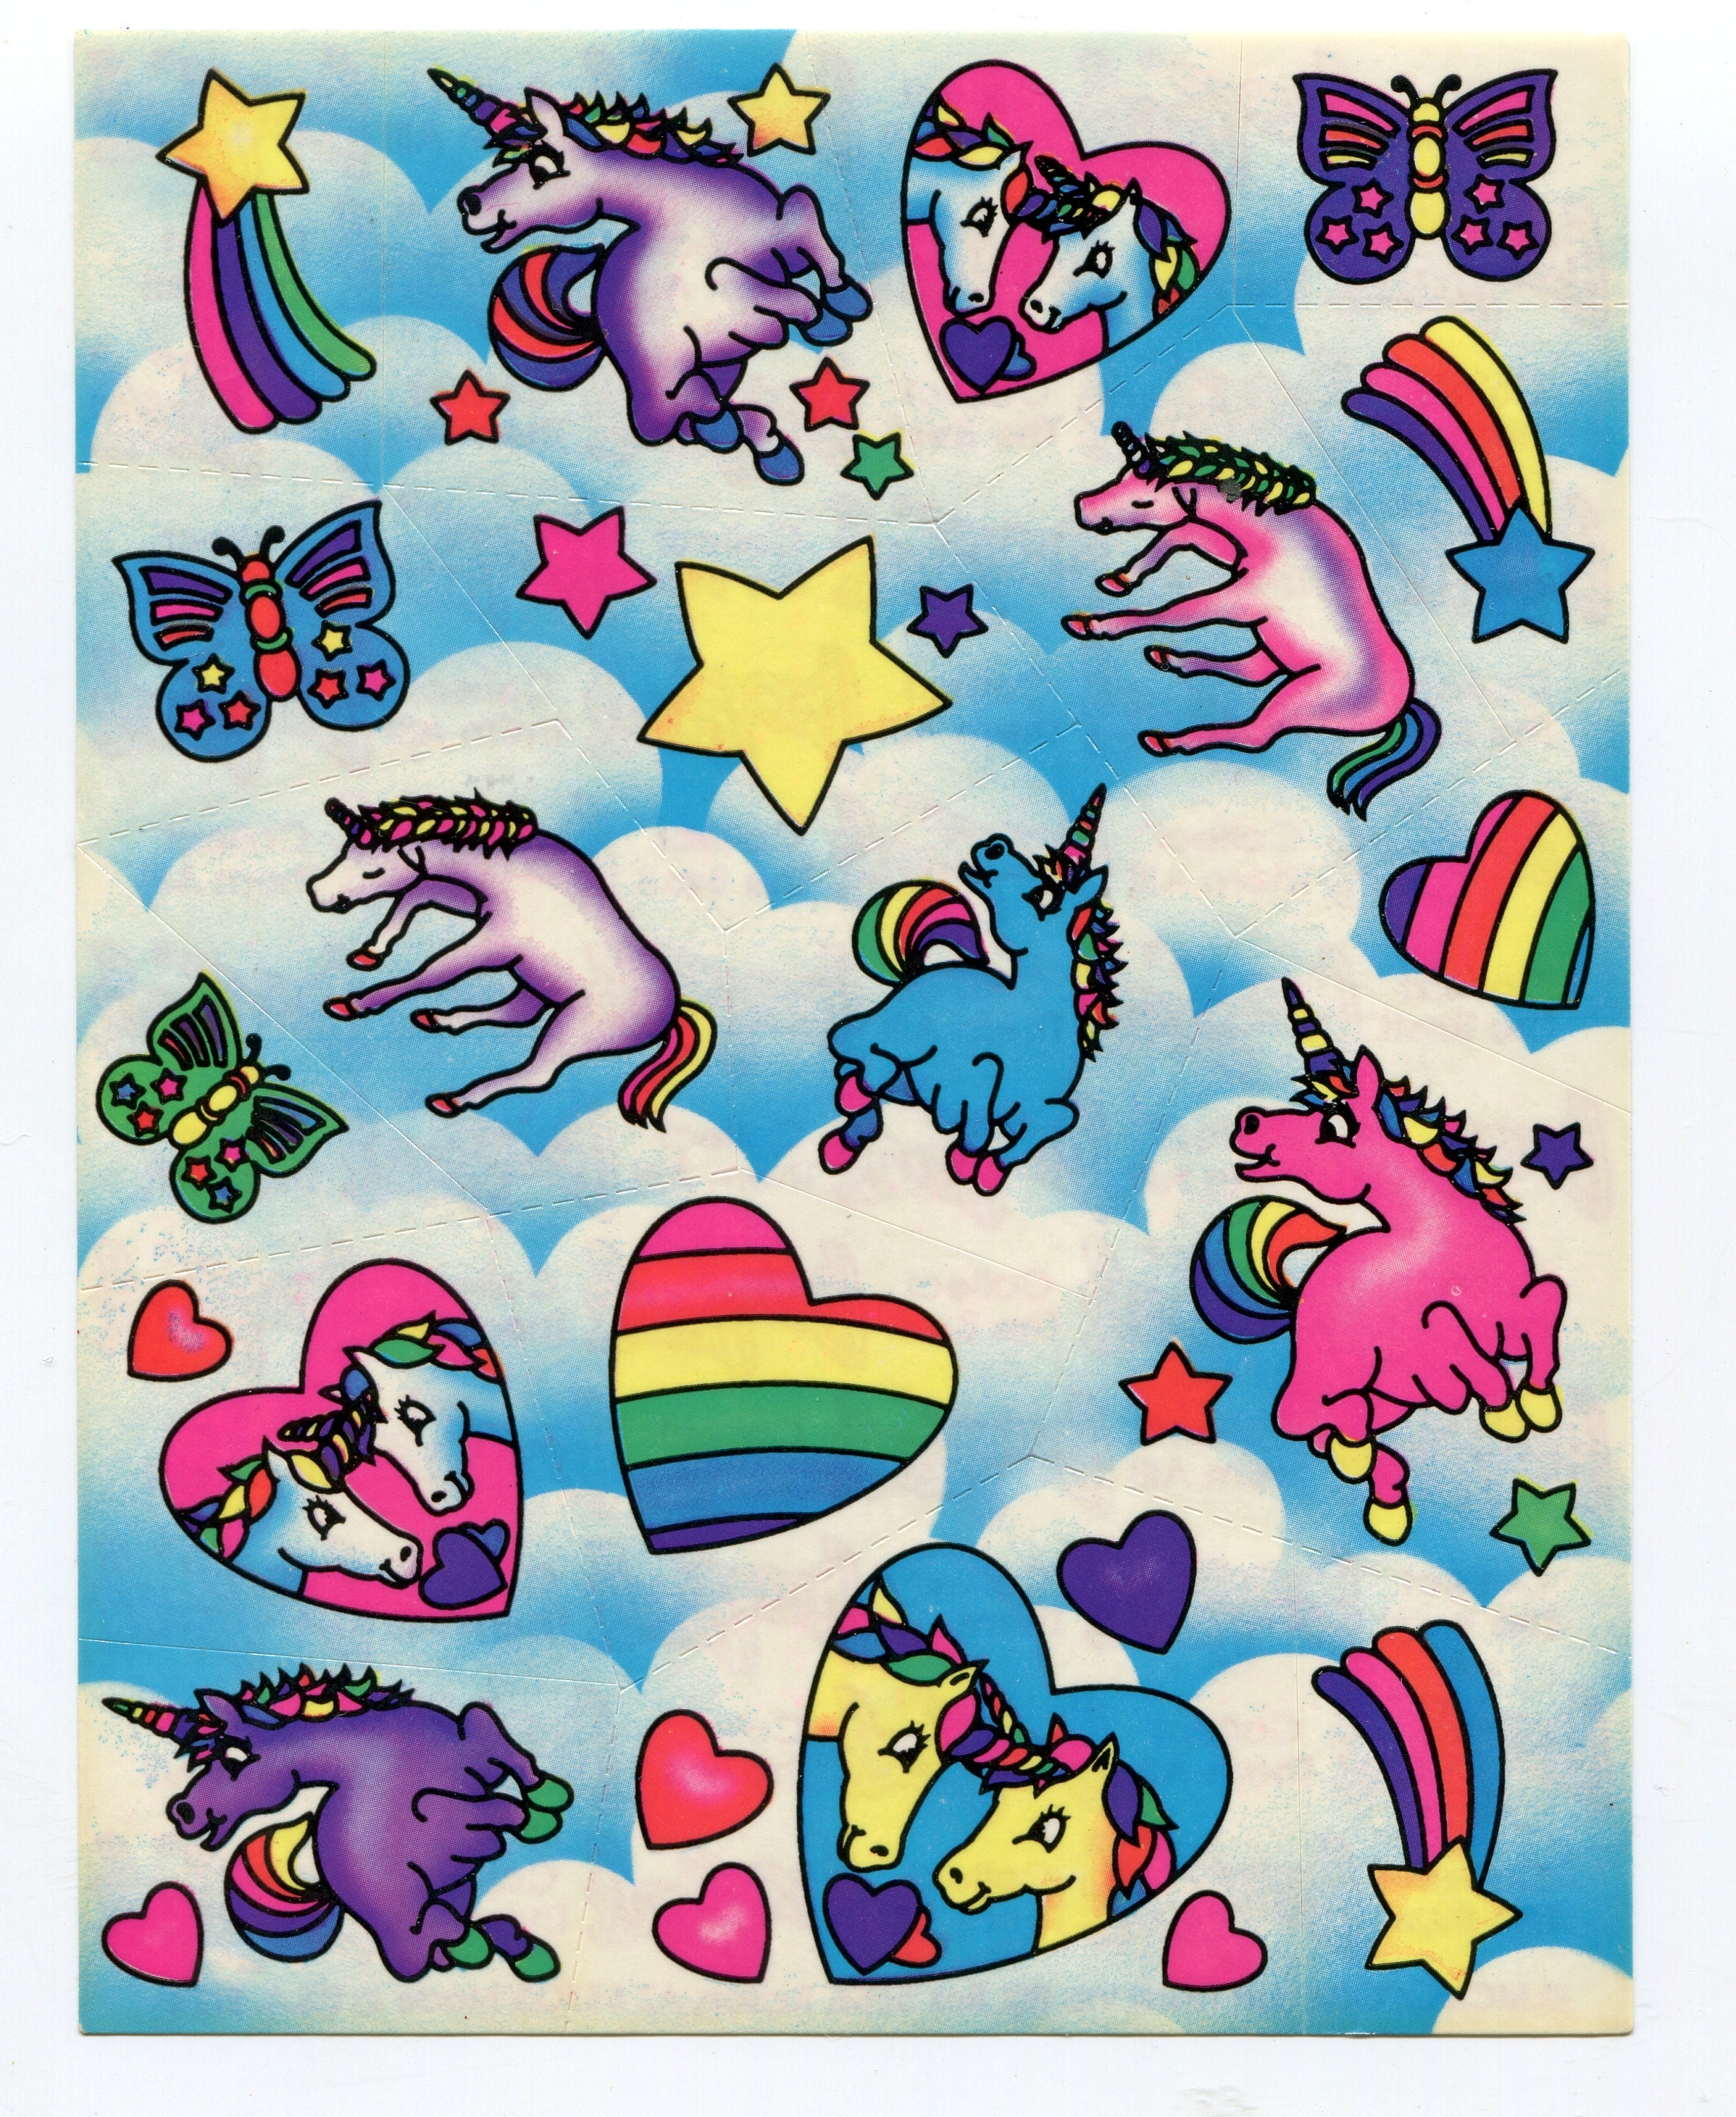 Magical Mod Unicorn Valentine's Day Stickers